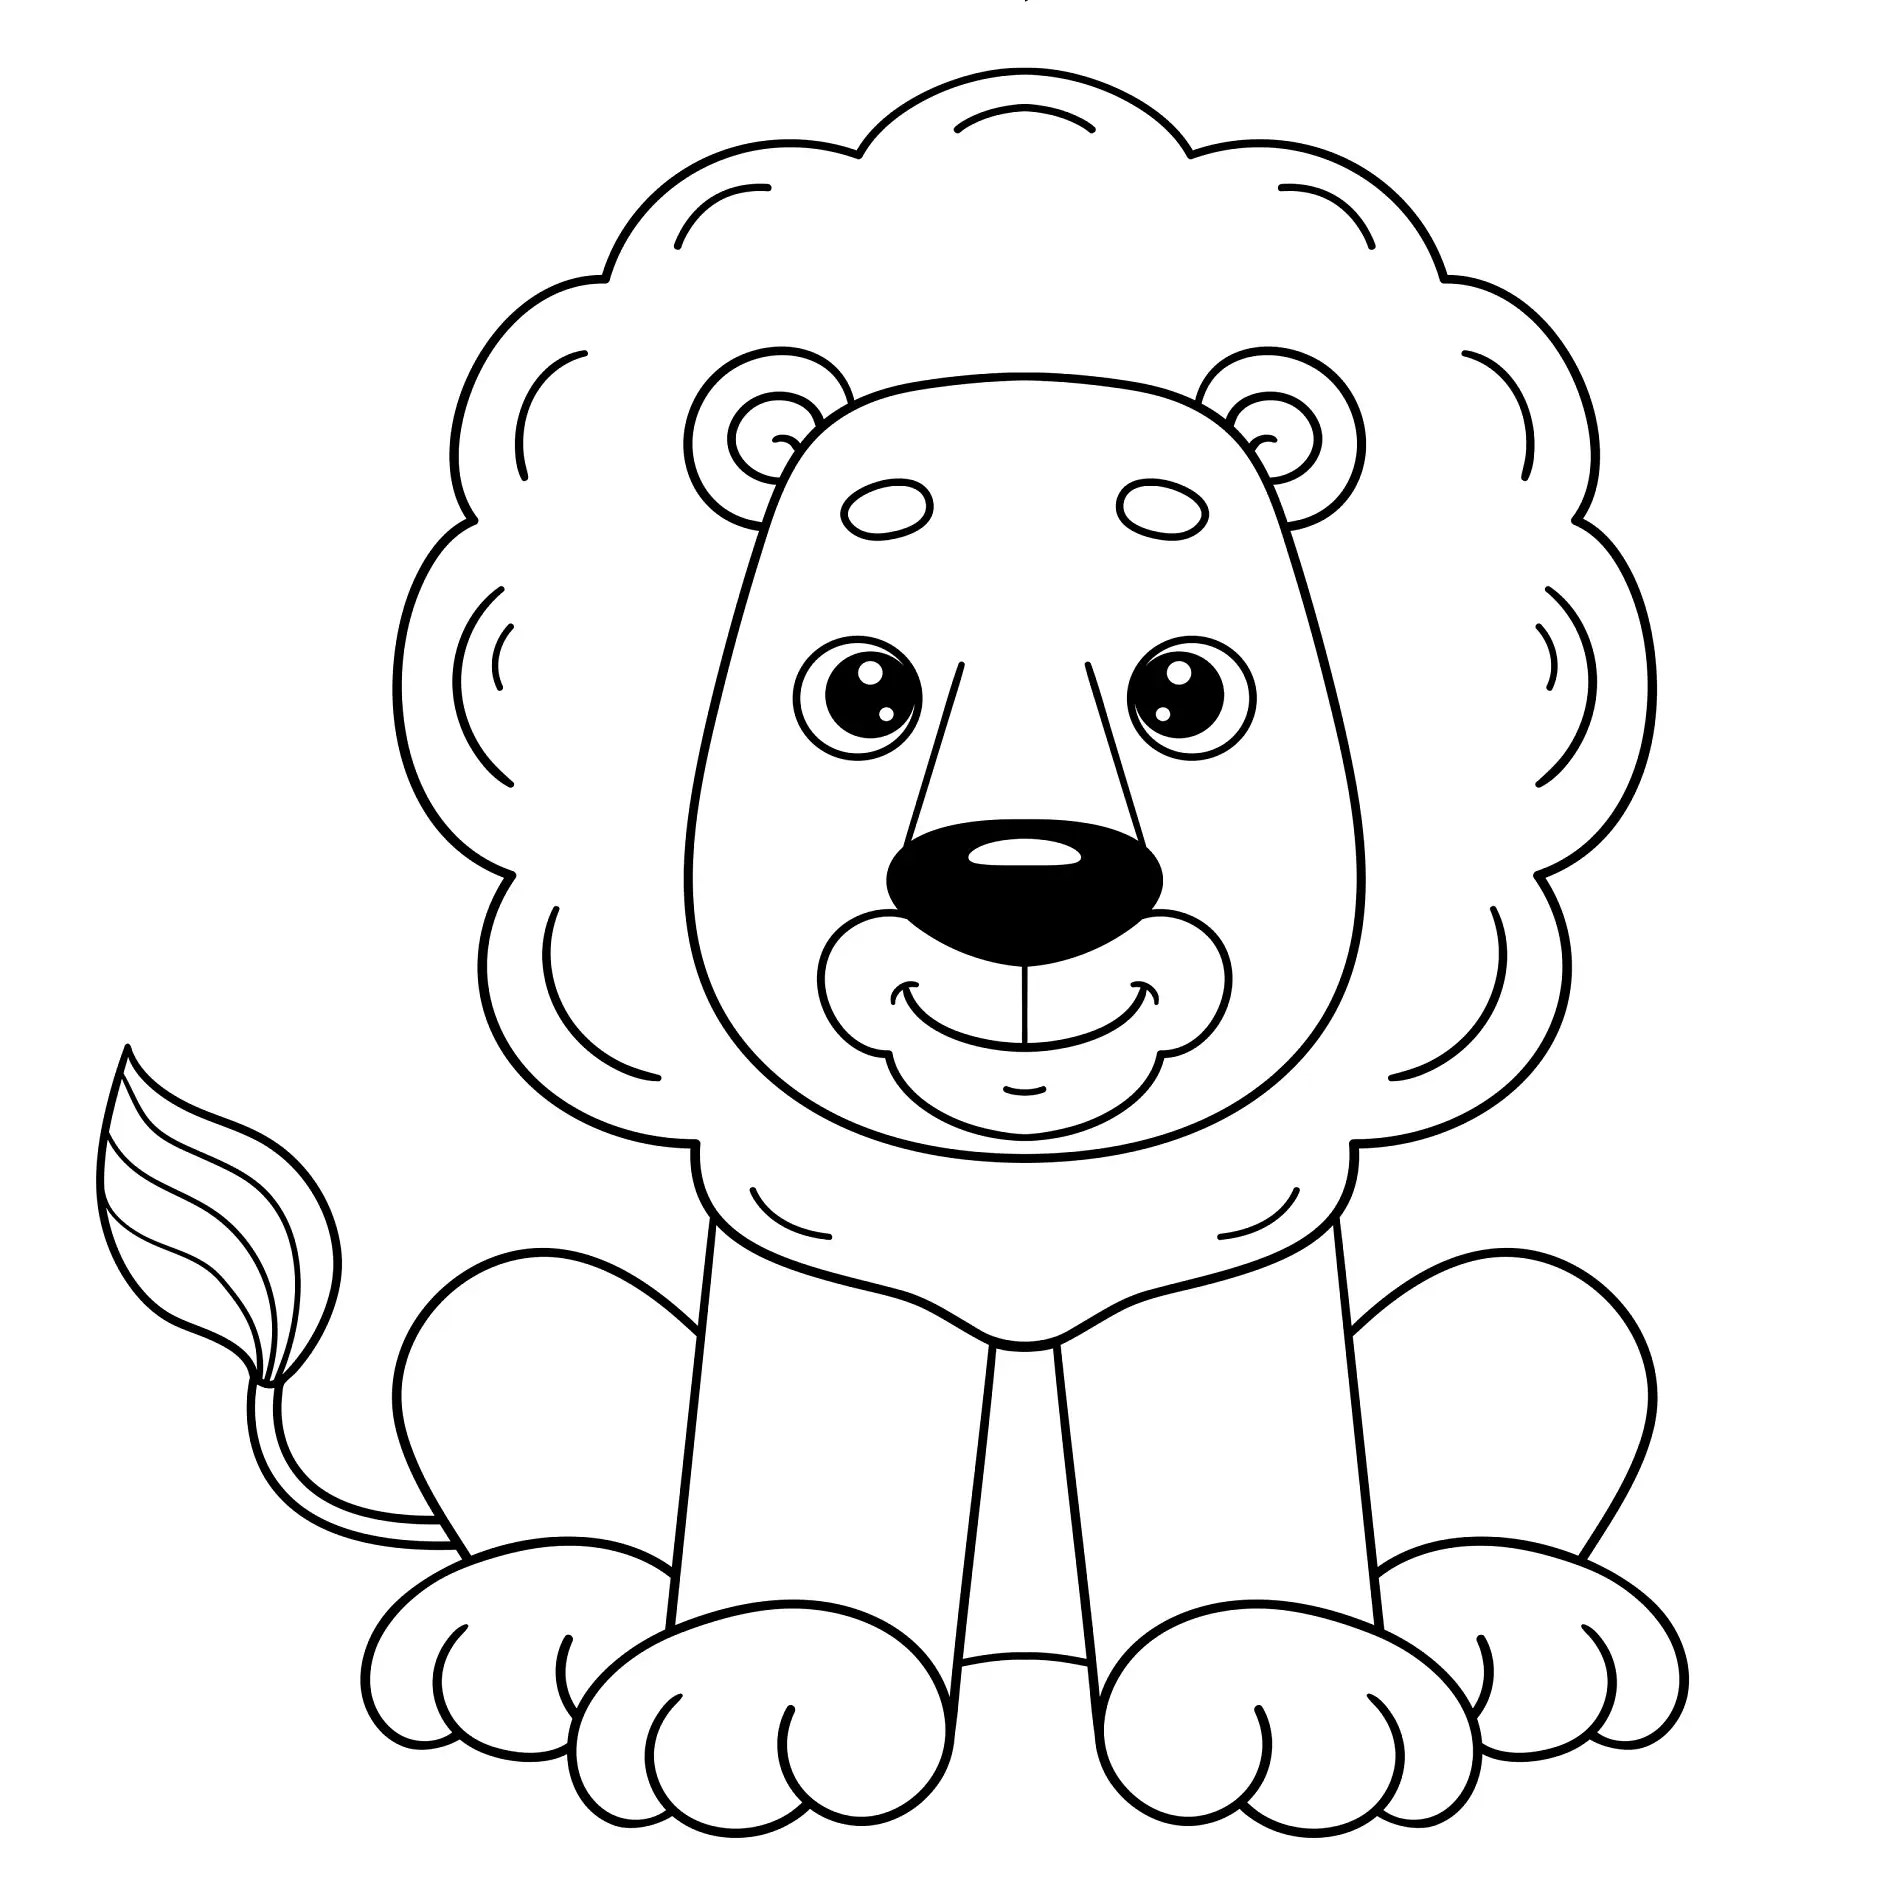 Ausmalbild Löwe sitzend lächelndColoring Page Outline Of cartoon cute lion. Coloring Book for kids.